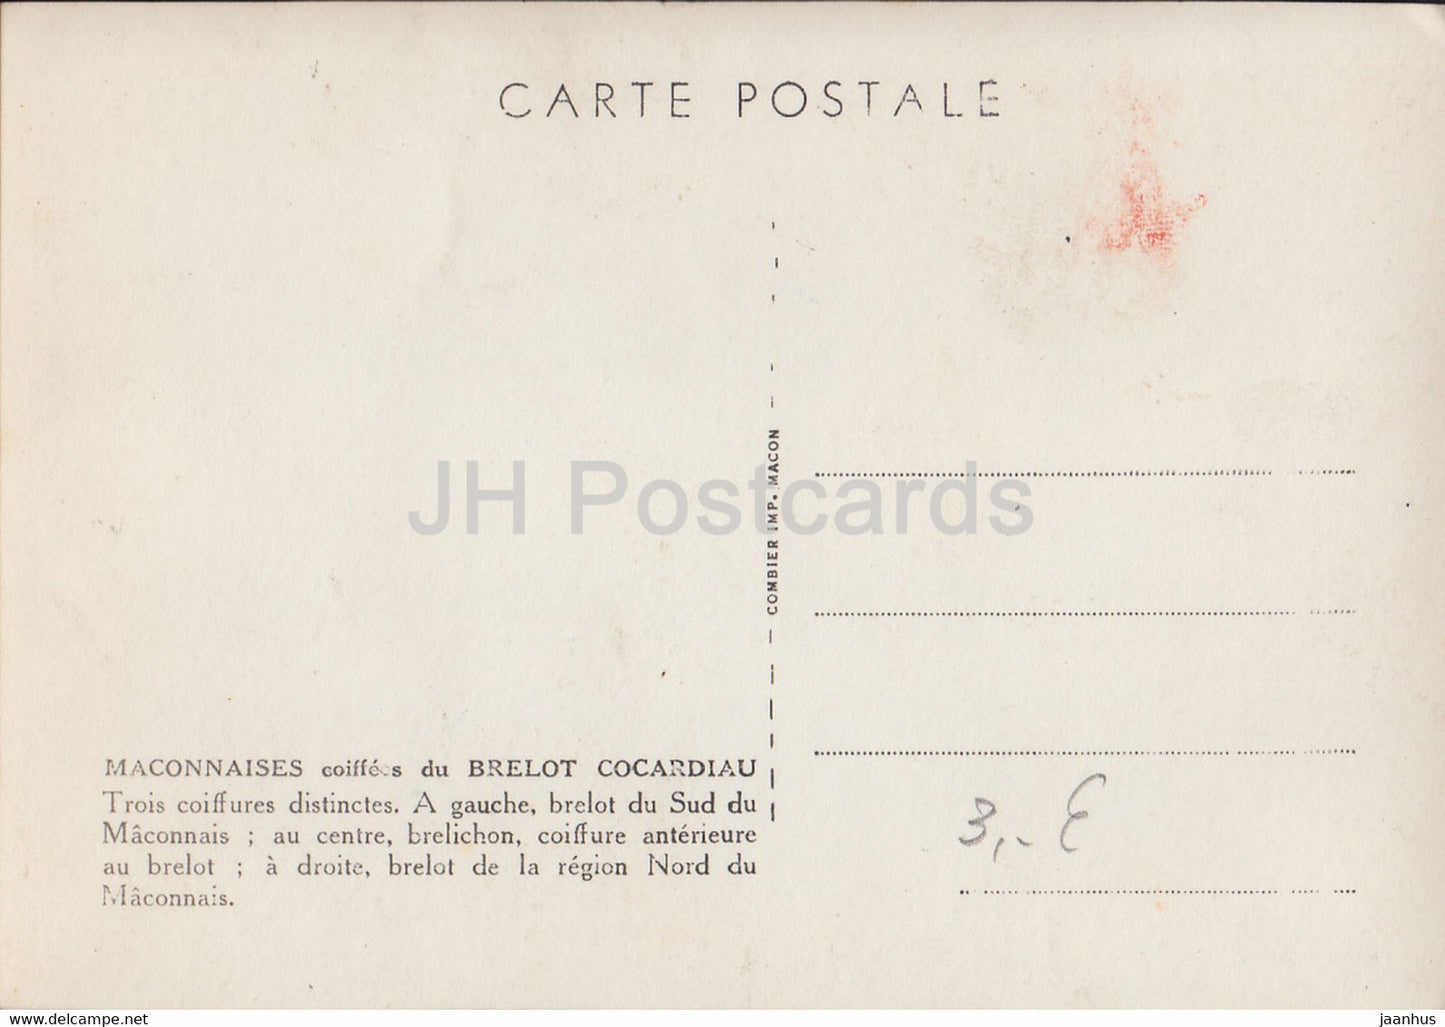 Maconnaises - Brelot Cocardiau - Volkskostüme - alte Postkarte - Frankreich - unbenutzt